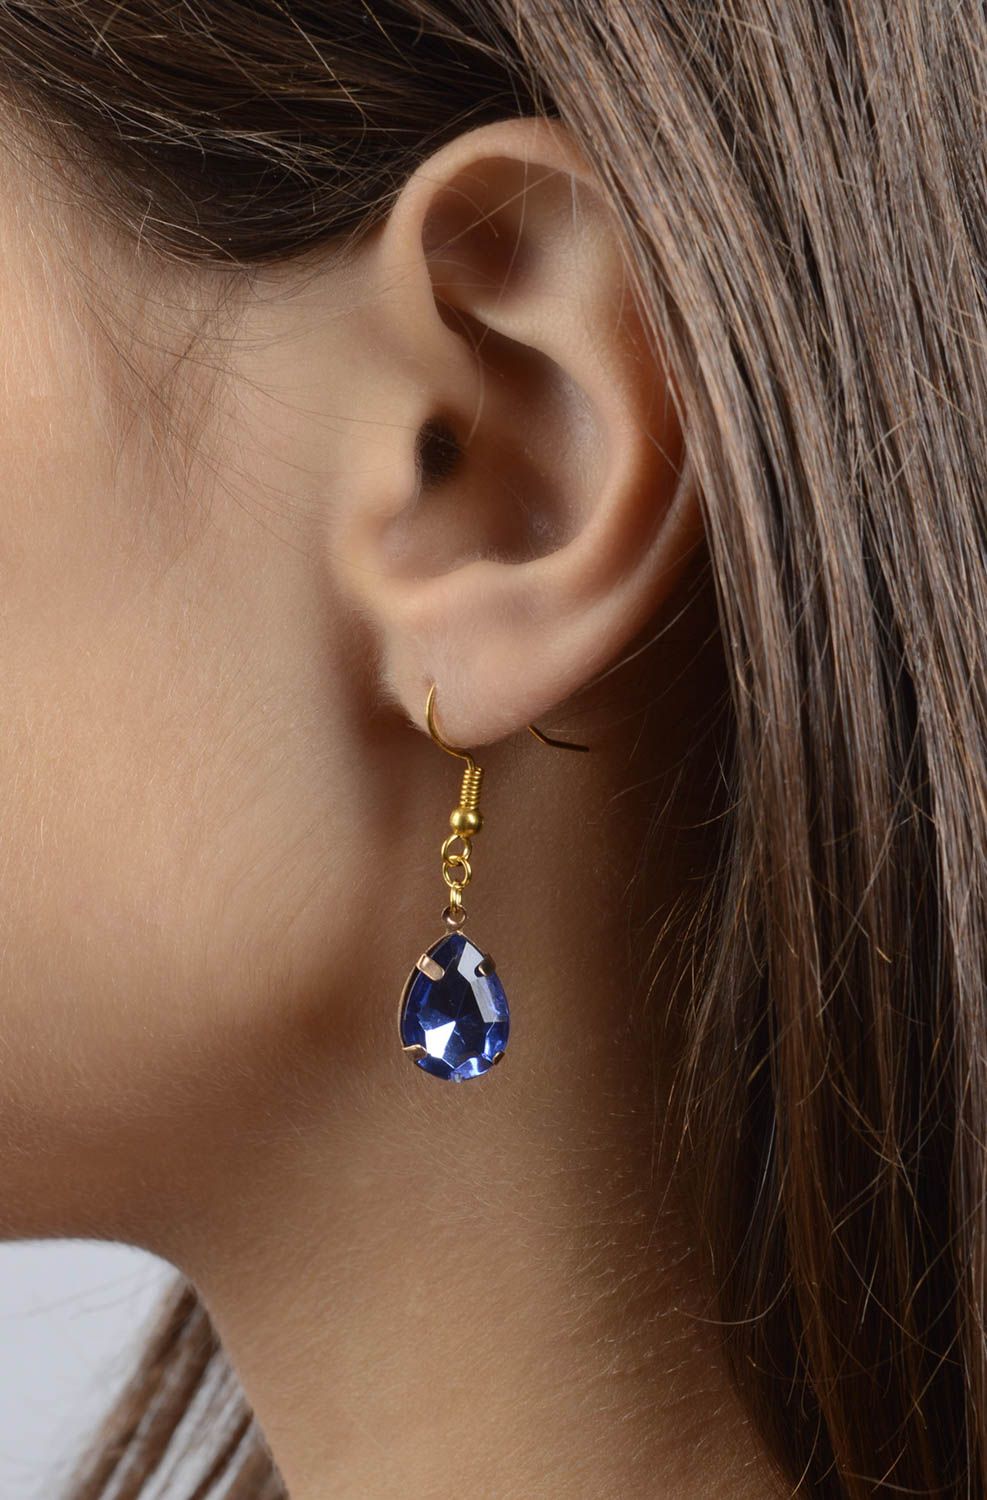 Stylish earrings designer jewelry handmade earrings fashion accessories photo 4